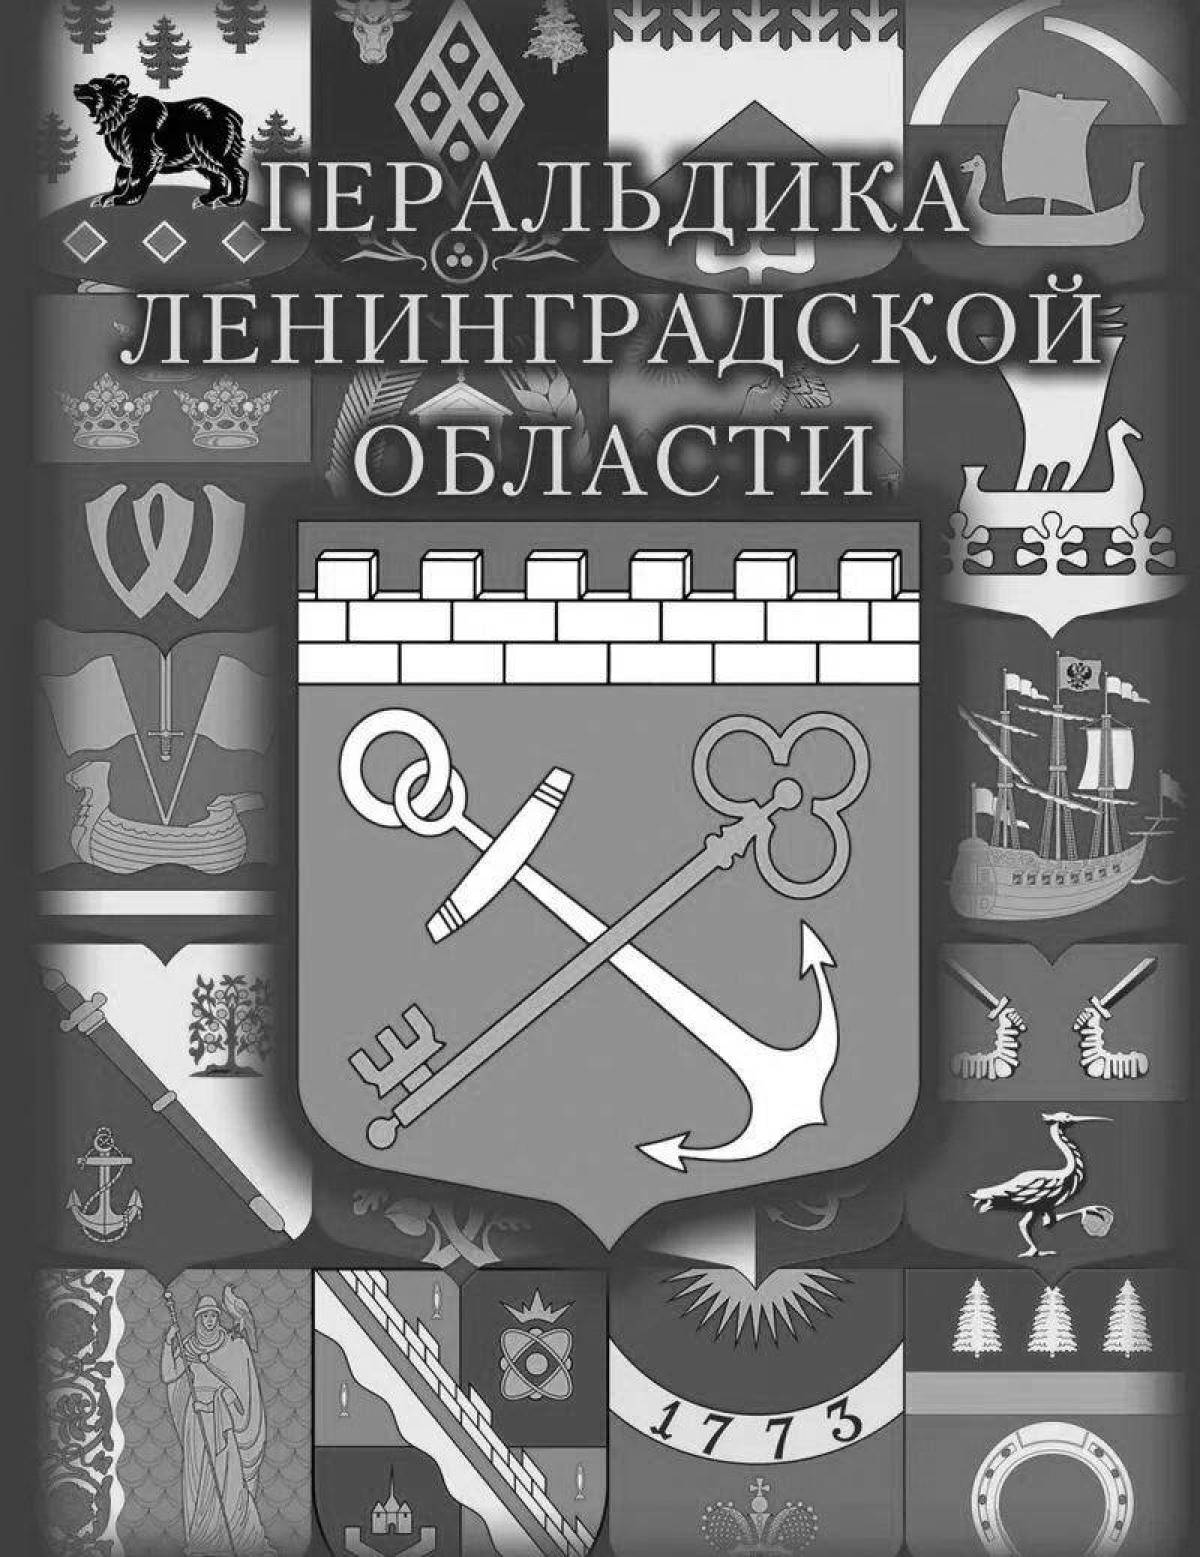 Coat of arms of the Leningrad region #1